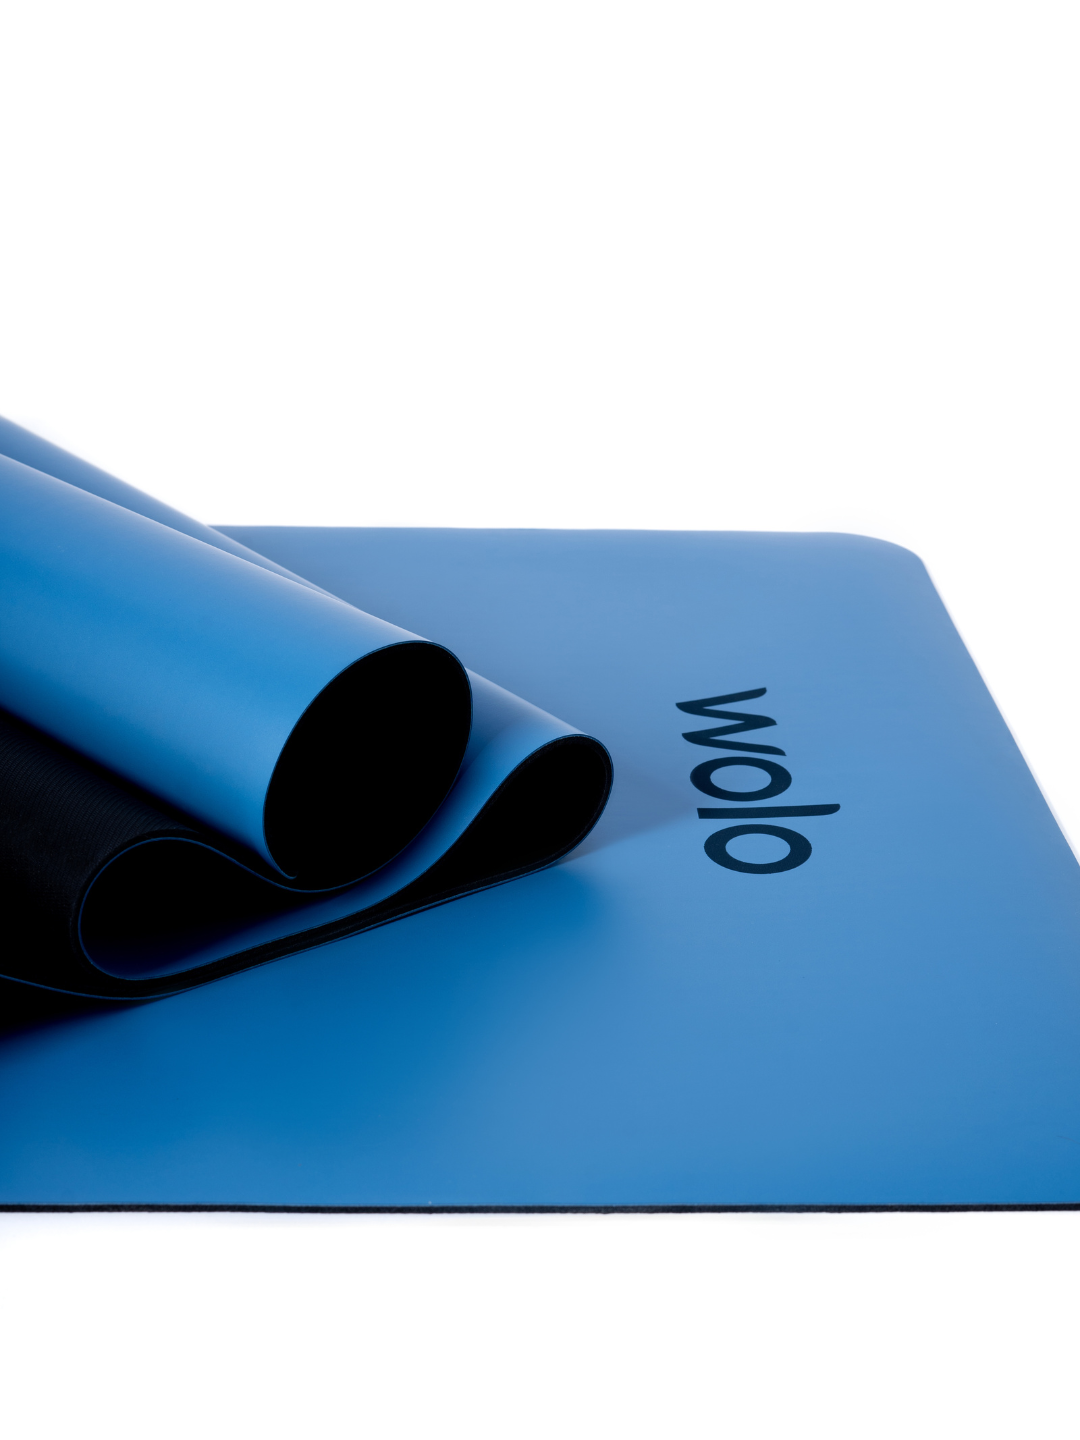 Close-up view of an Alaskan blue yoga mat